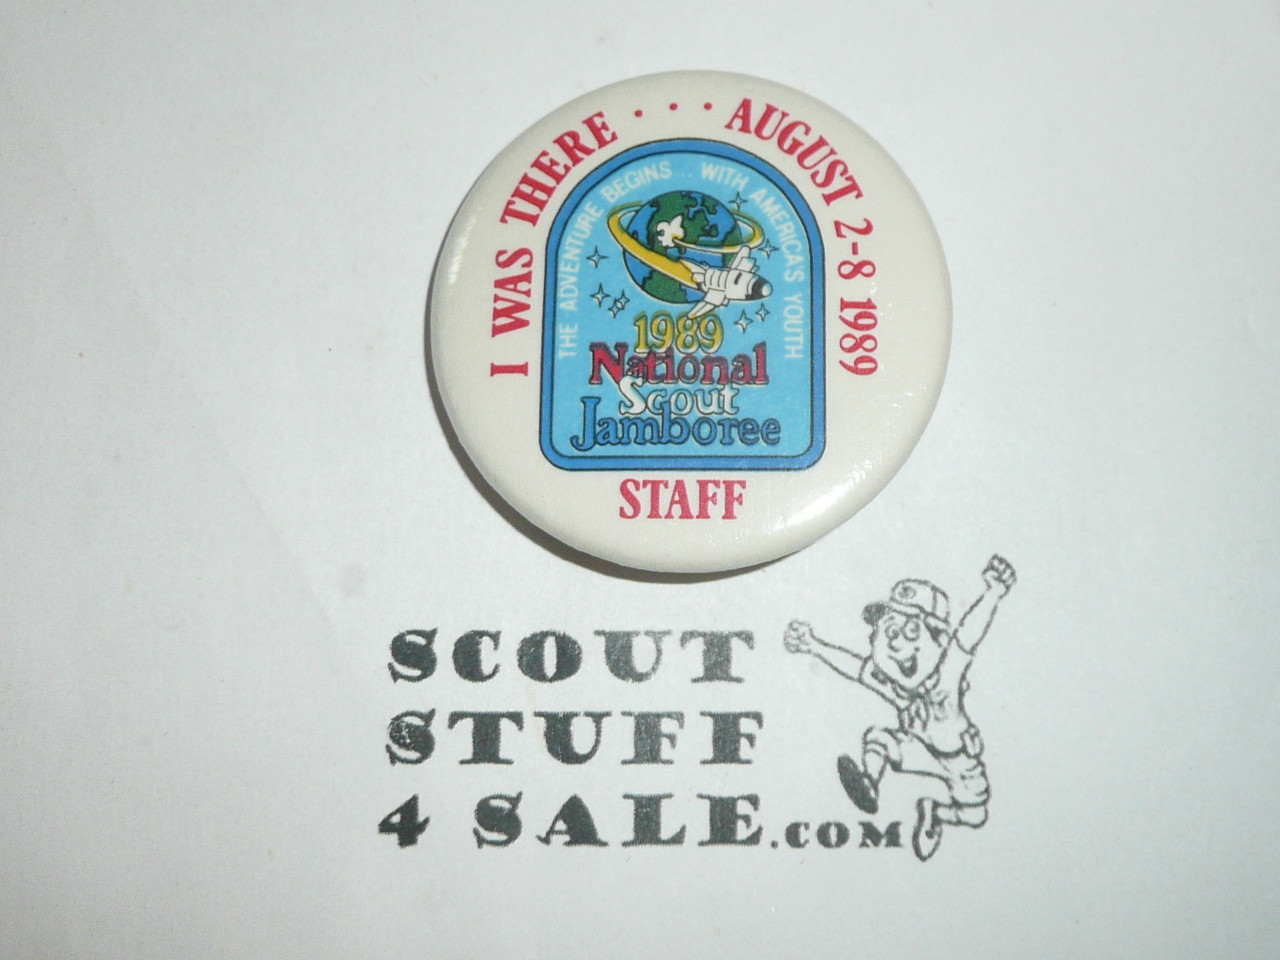 1989 National Jamboree STAFF I Was There Celuloid Button